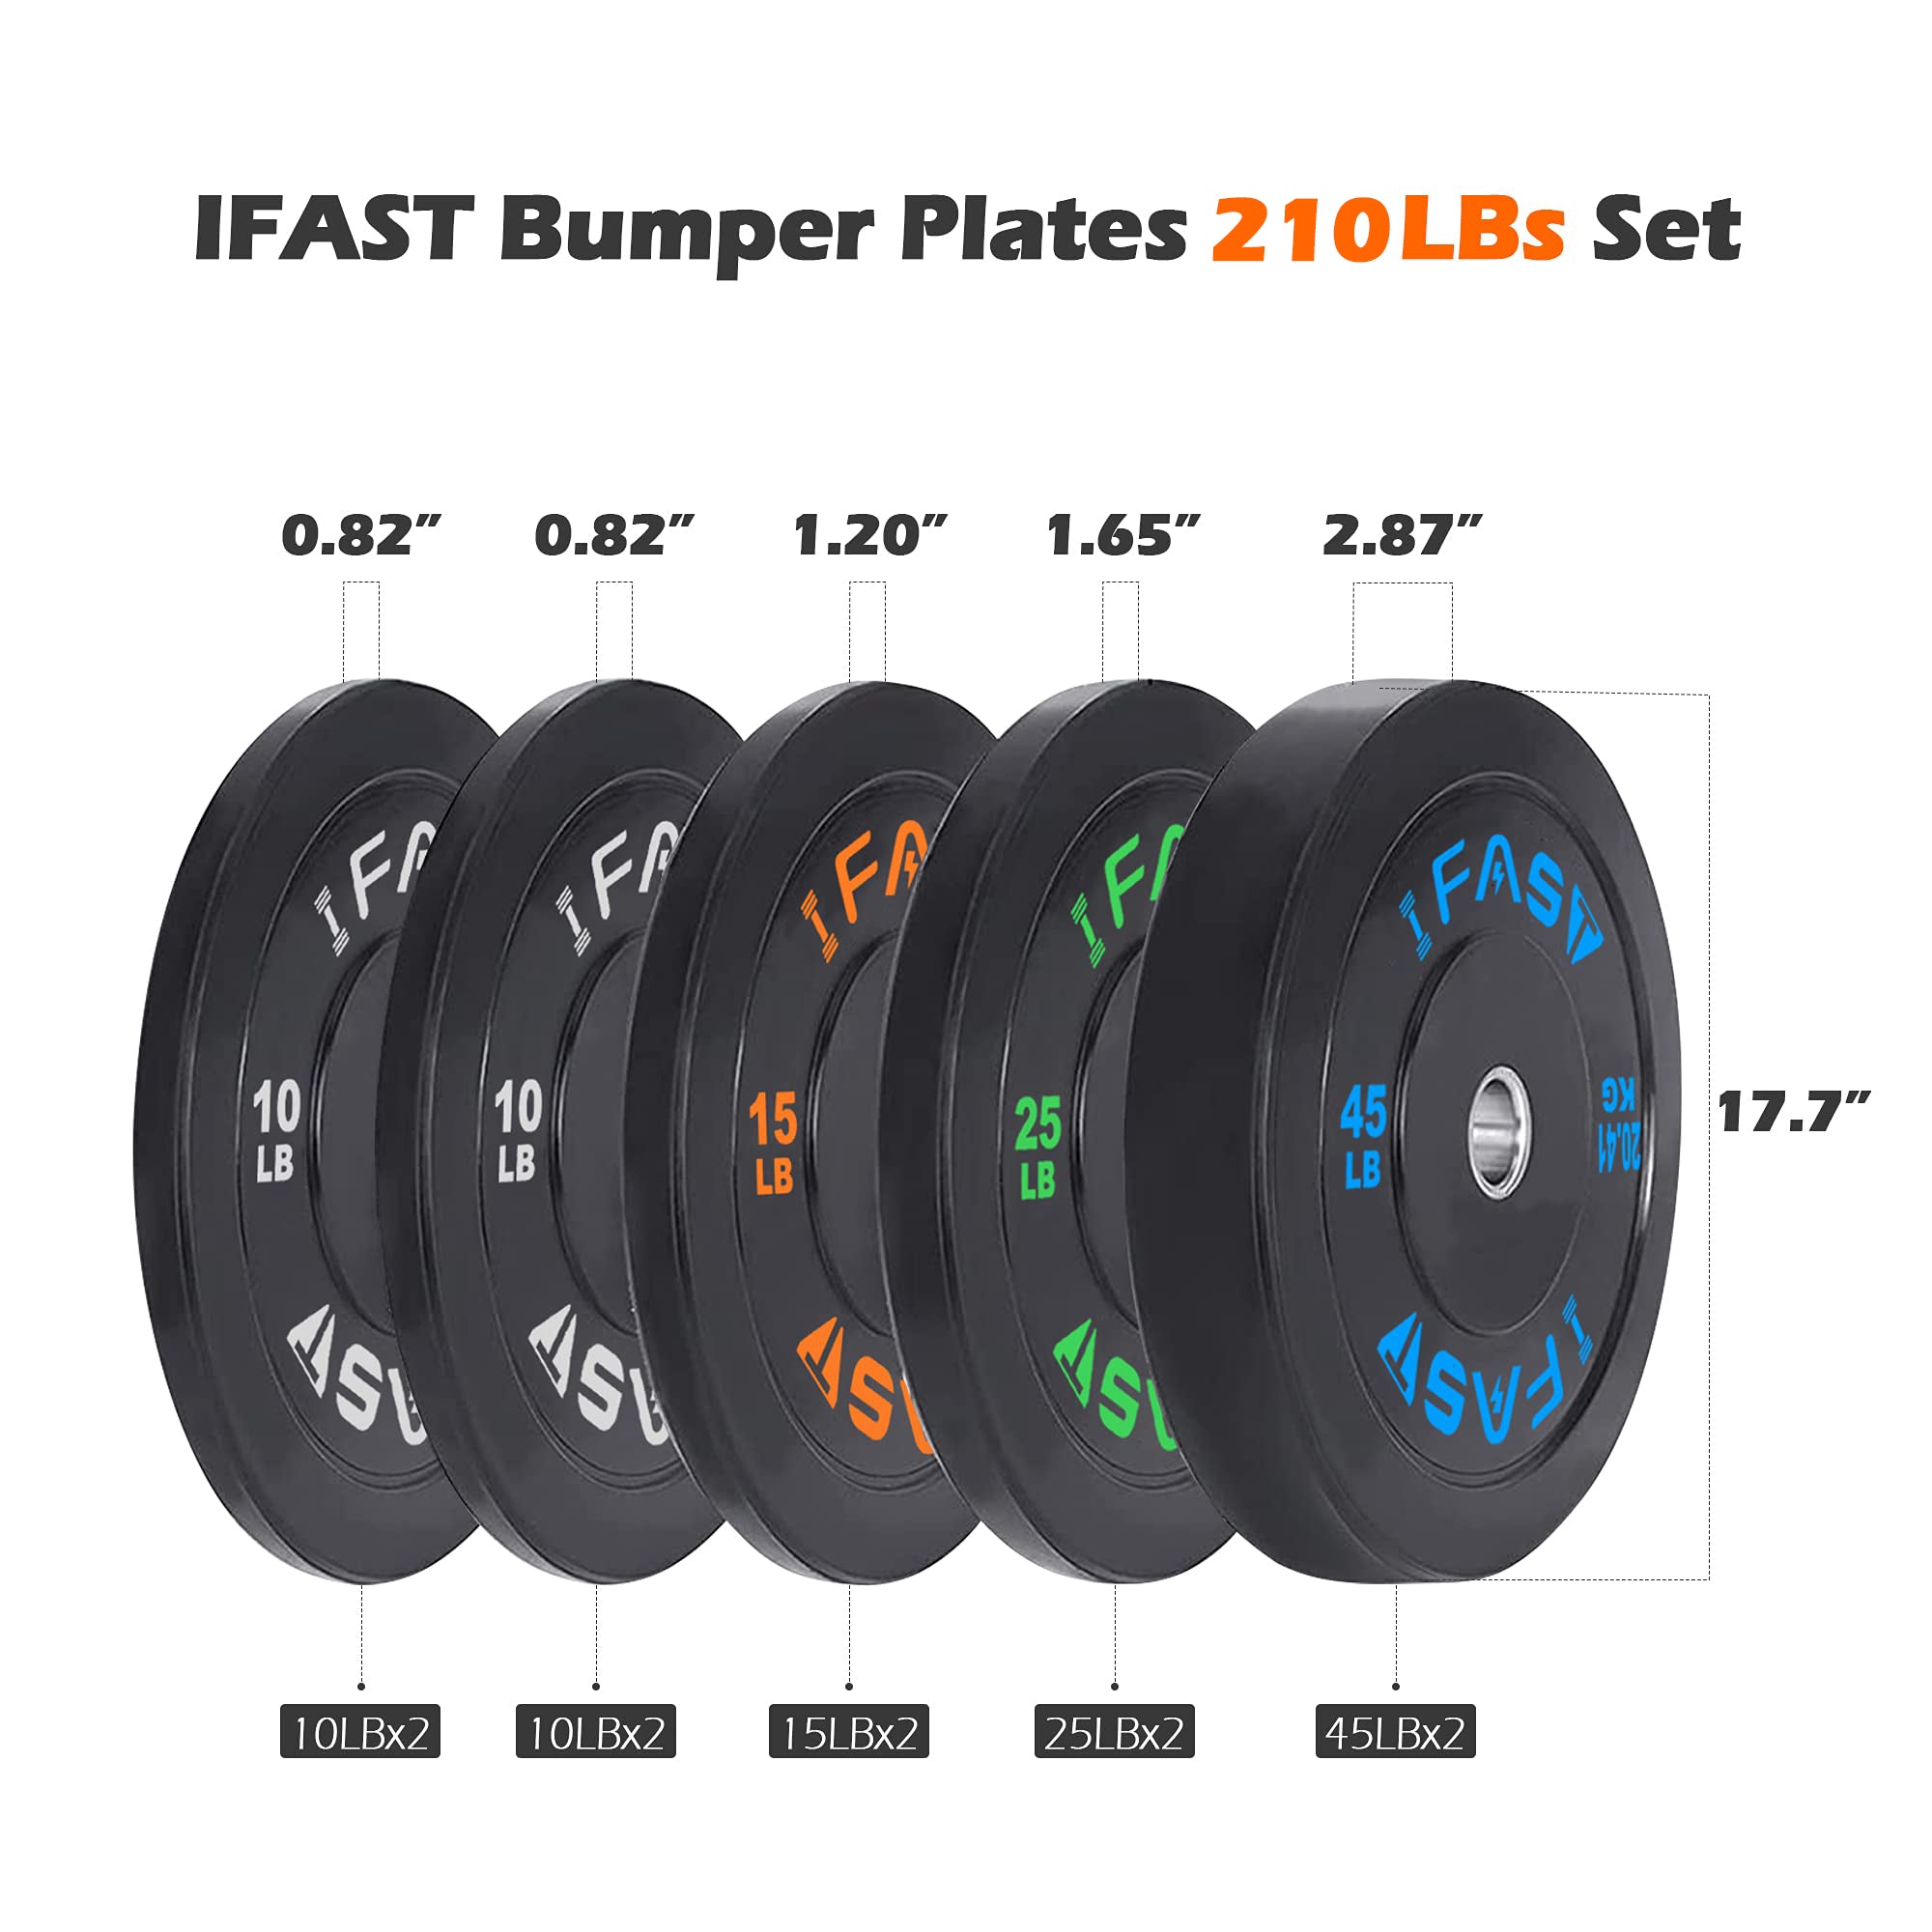 IFAST 210 Lbs bumper plates